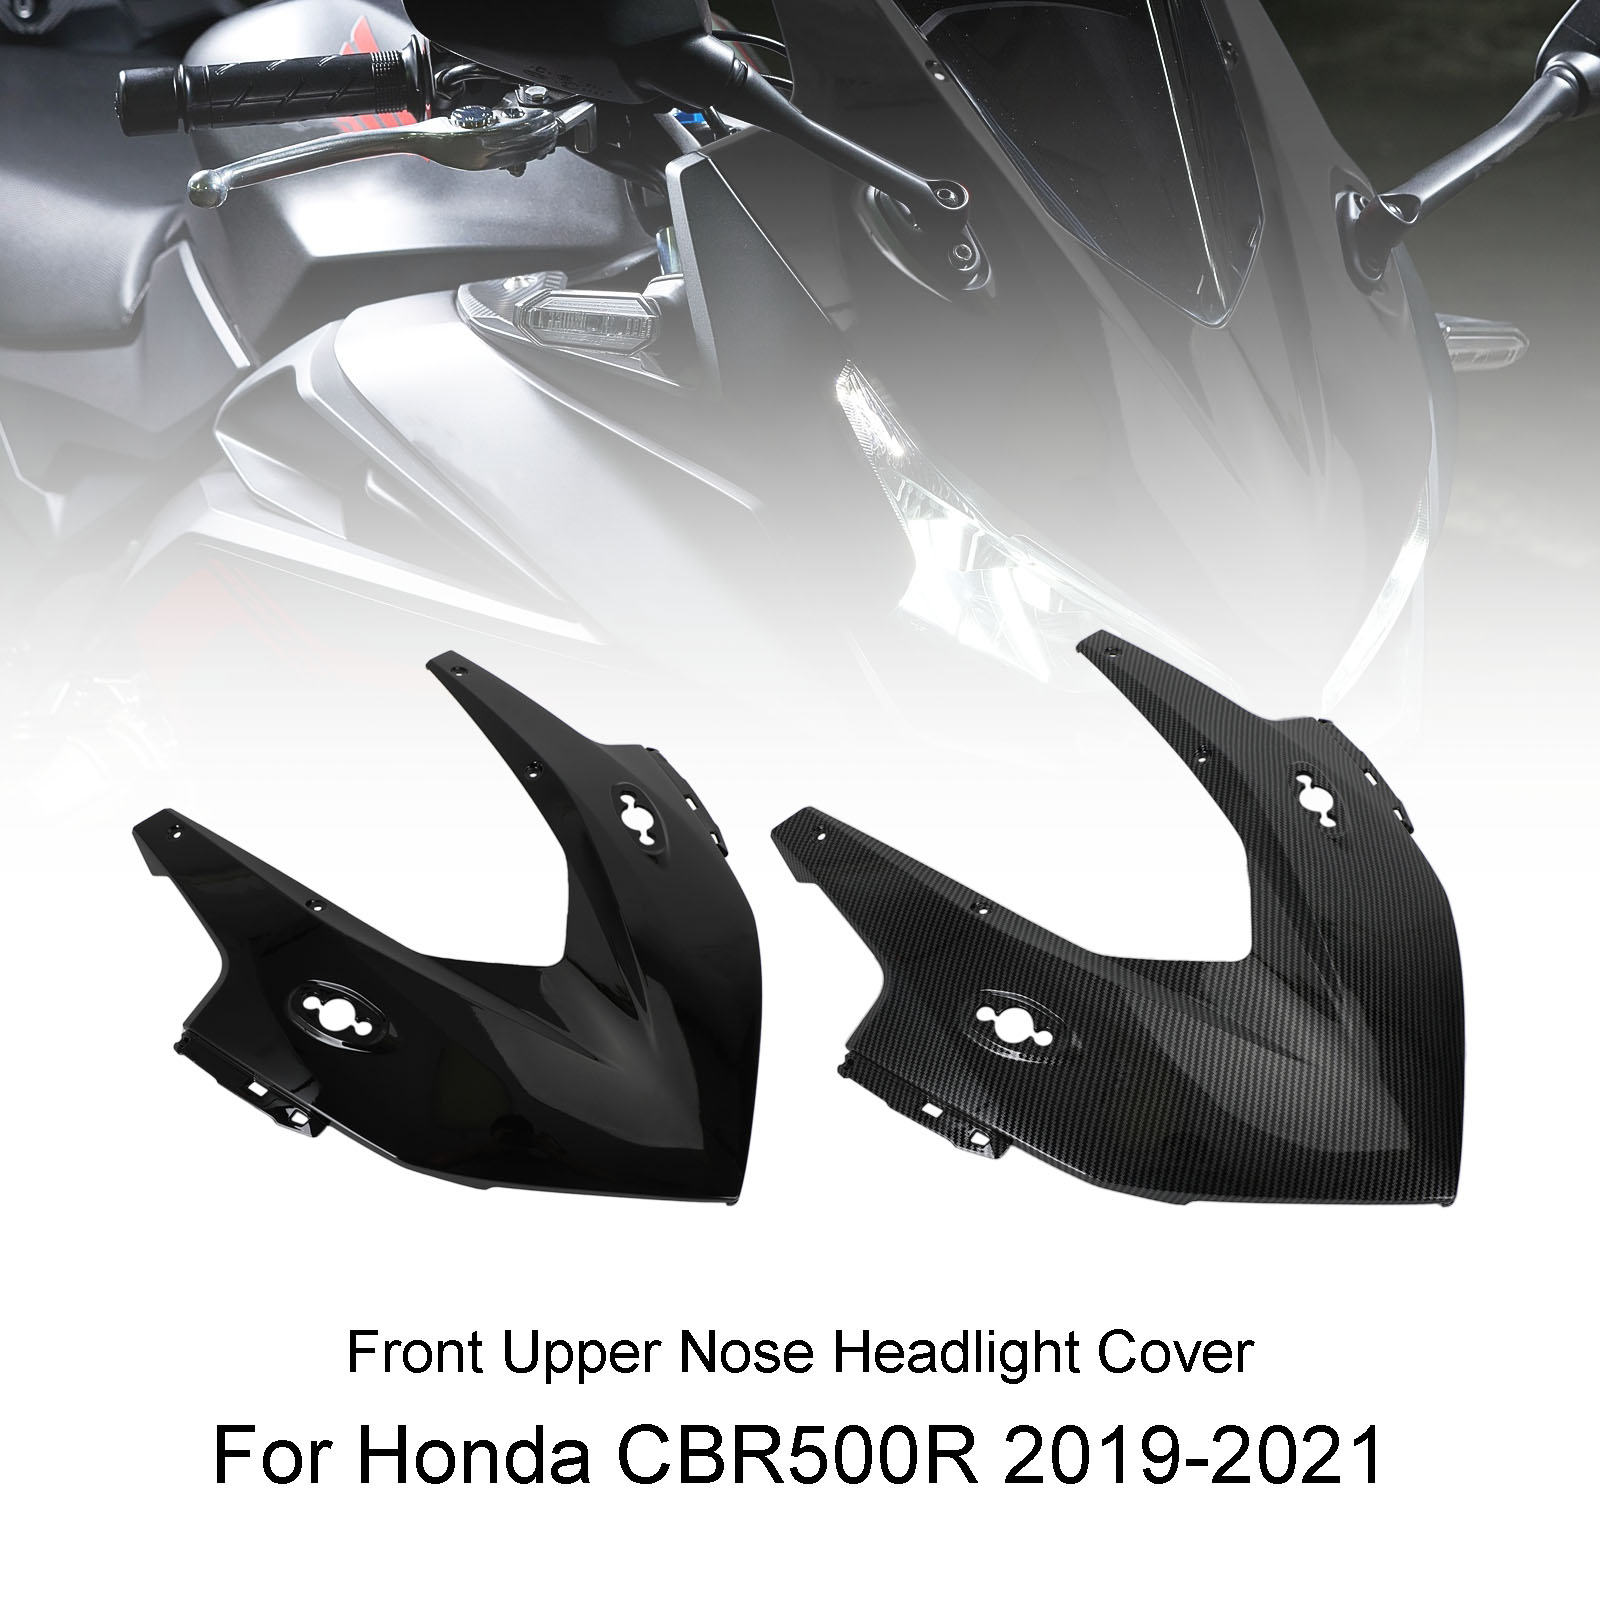 Honda CBR500R 2019-2021 大燈上蓋-極限超快感